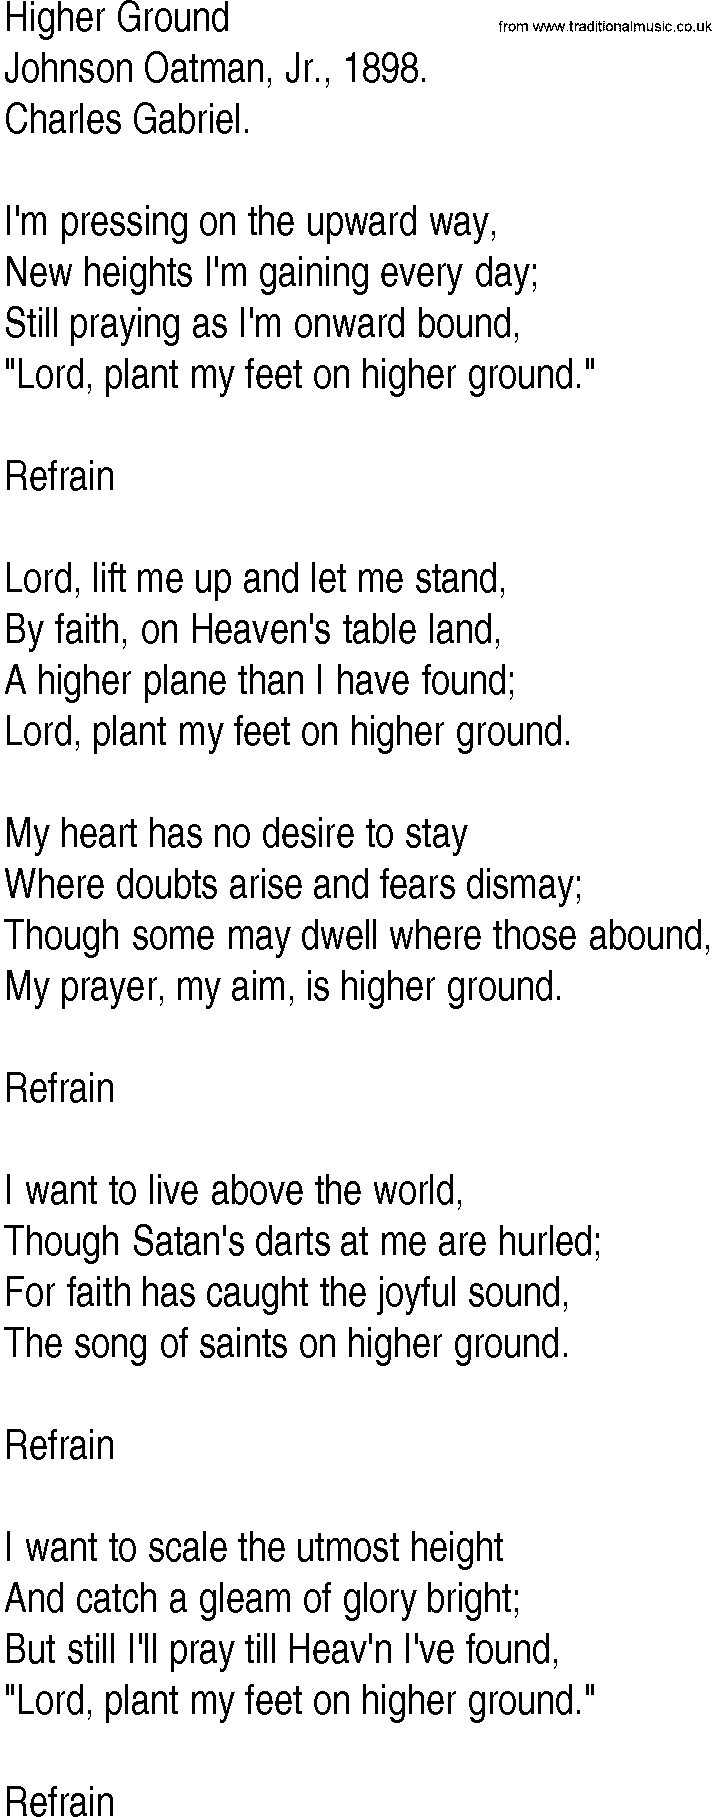 Hymn and Gospel Song: Higher Ground by Johnson Oatman Jr lyrics